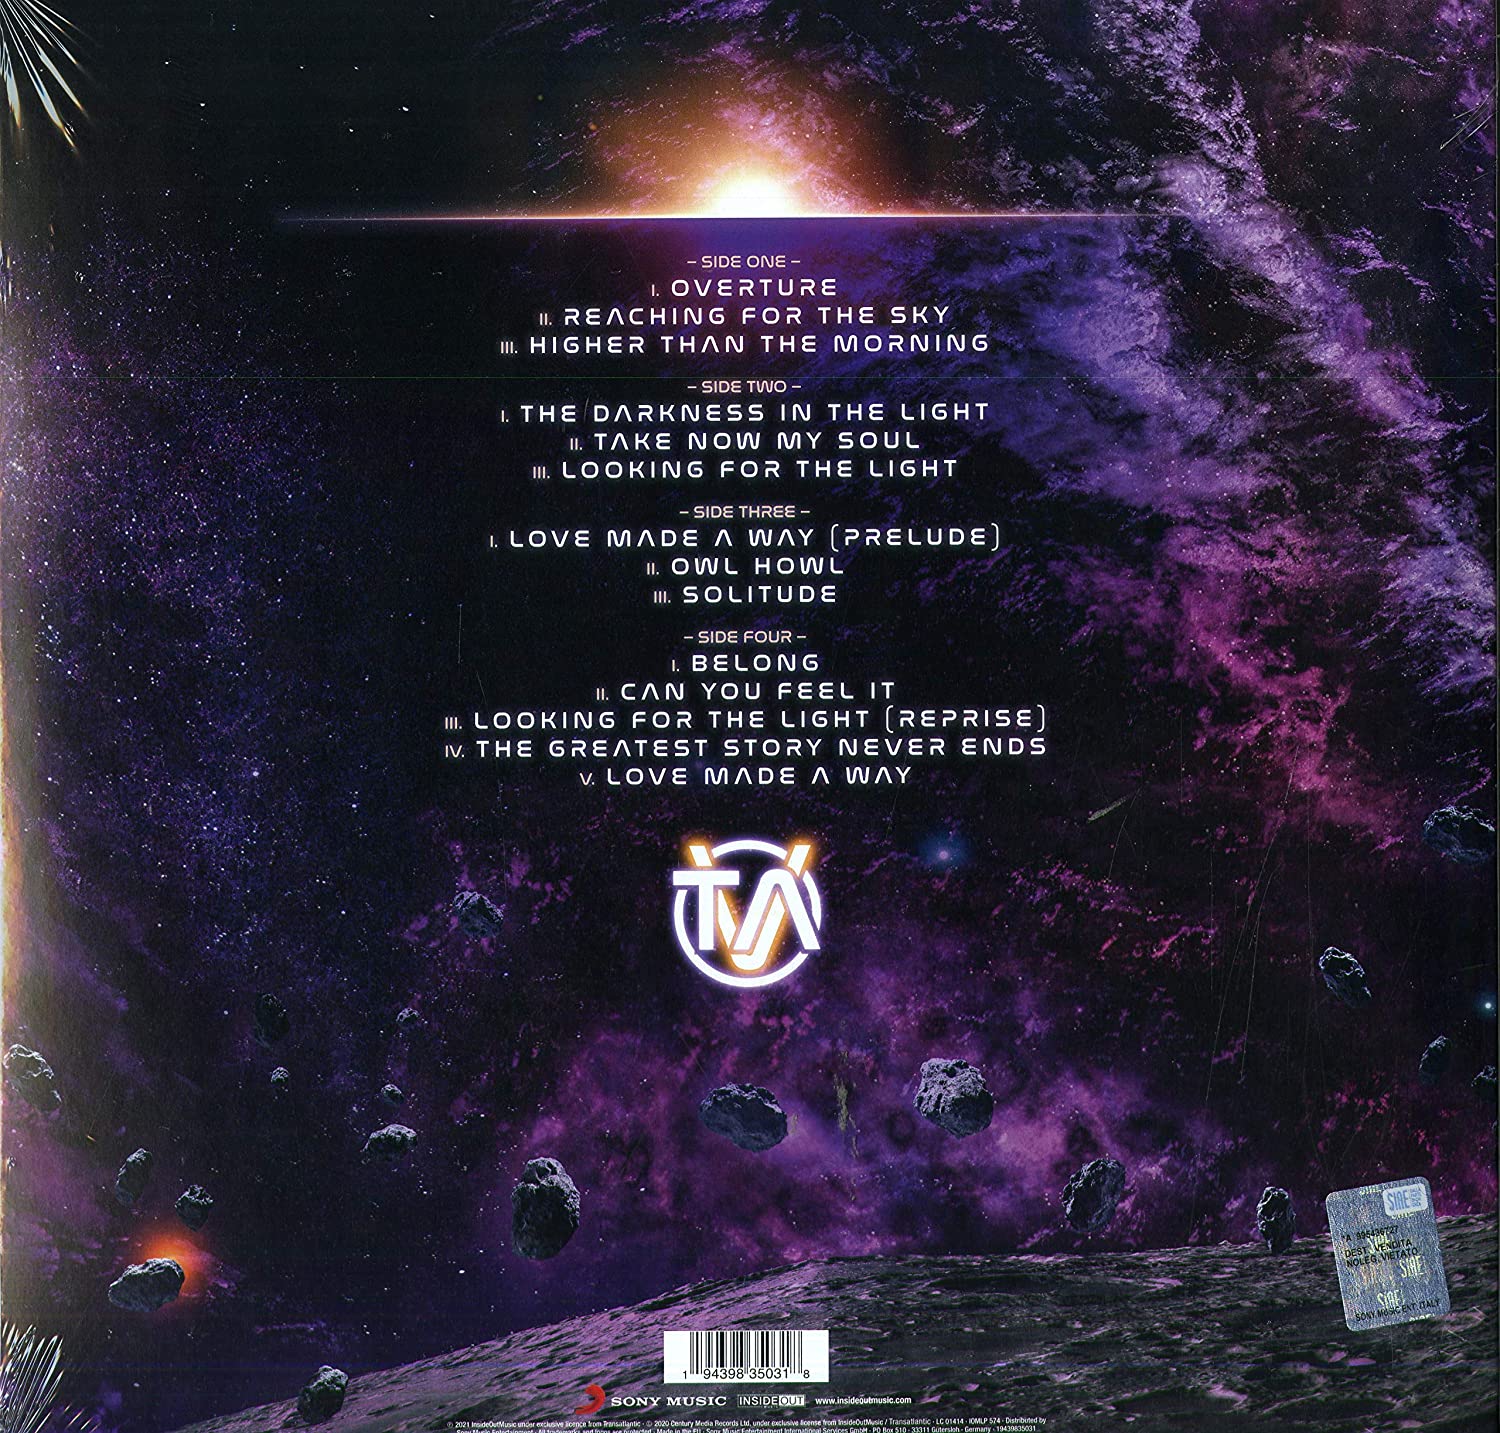 The Absolute Universe: The Breath Of Life (Abridged Version) - Vinyl | TransAtlantic